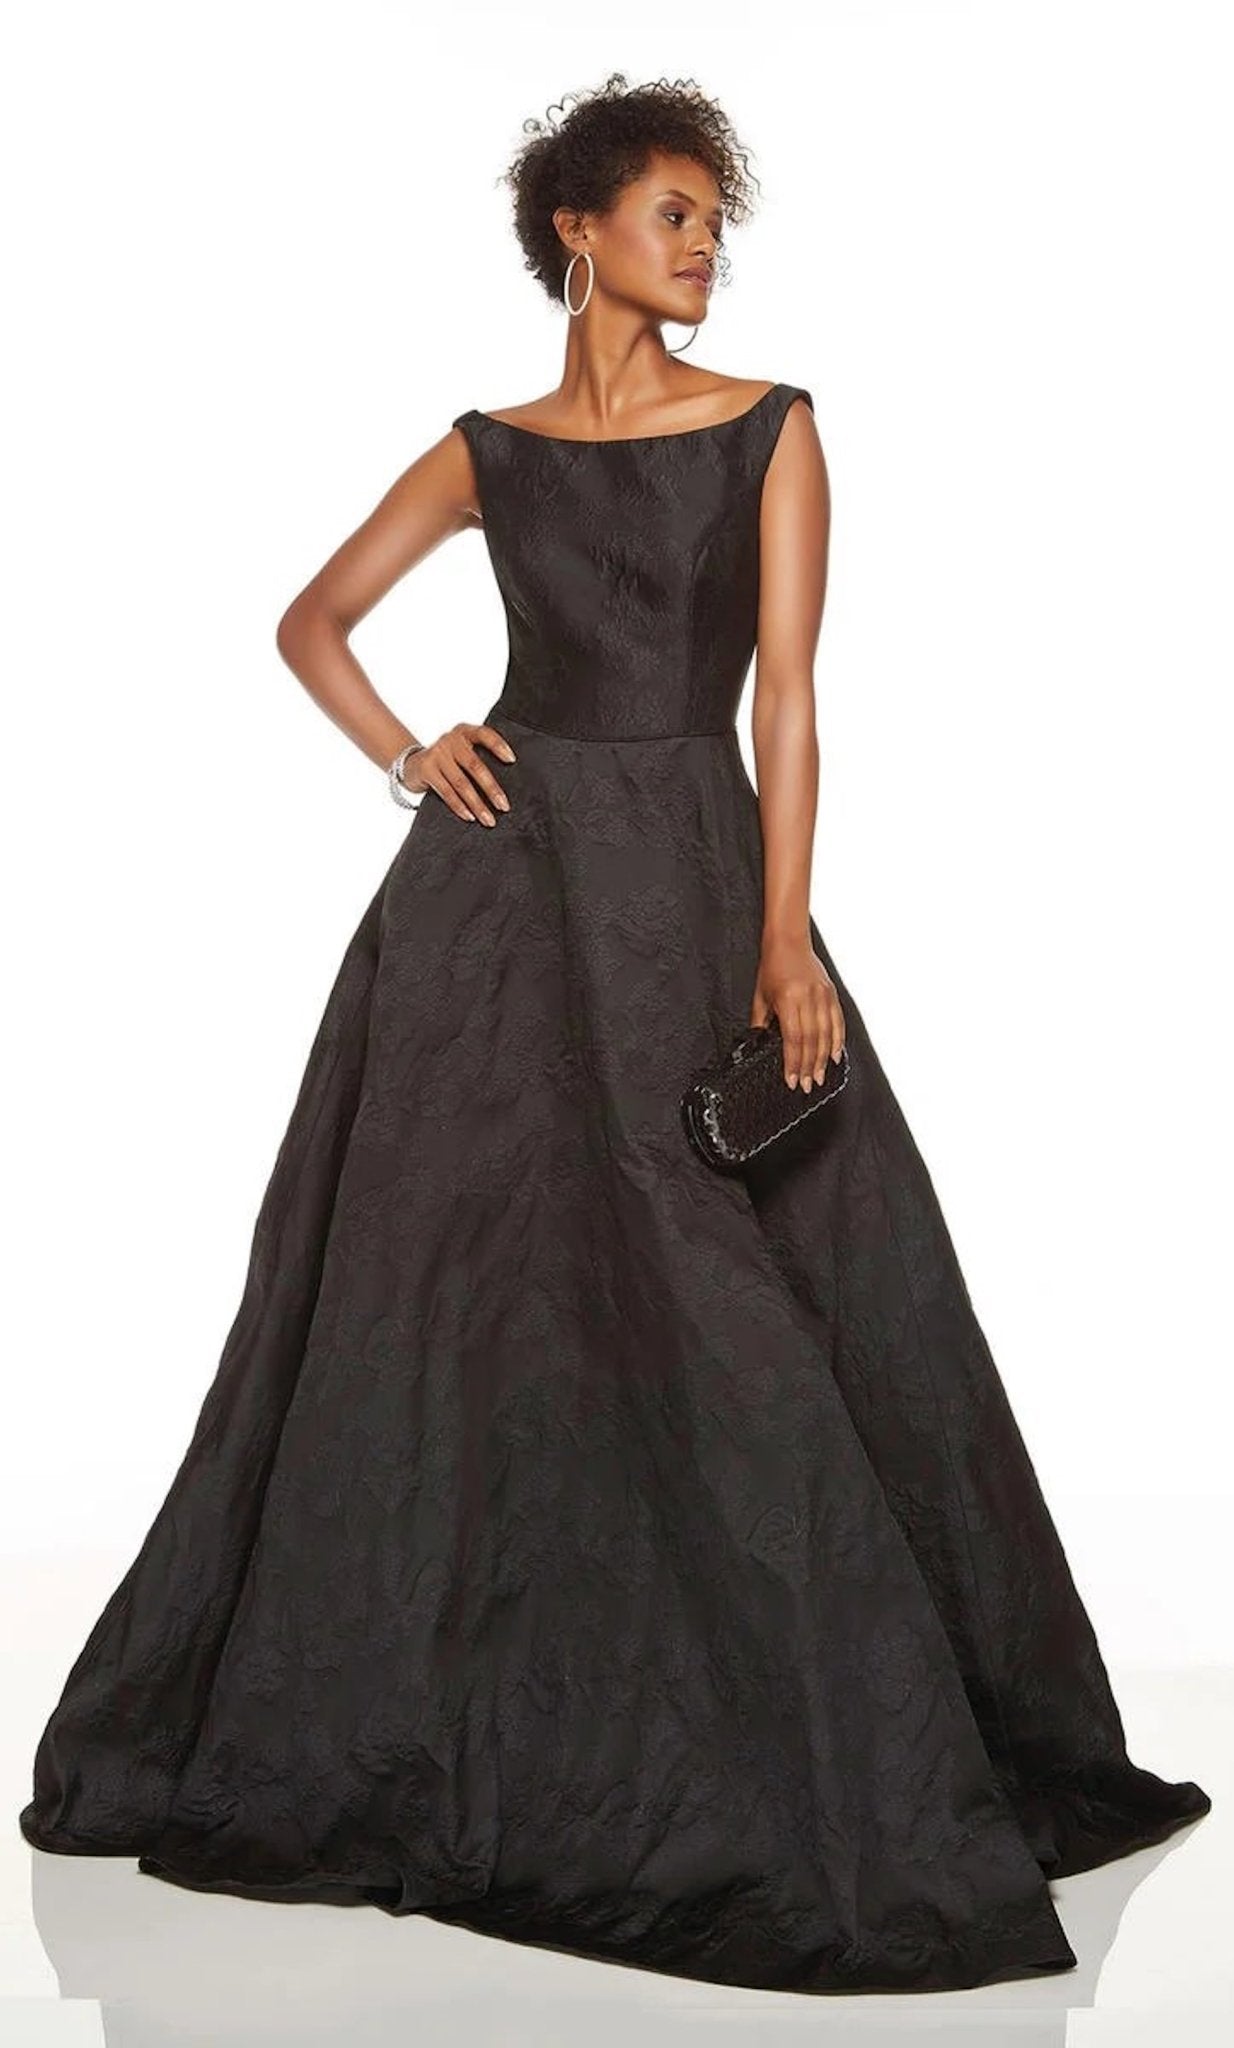 Stunning Black Lace Overlay Tulle A-line Black Wedding Dress | Black  wedding dresses, Black ball gown, Black lace wedding dress